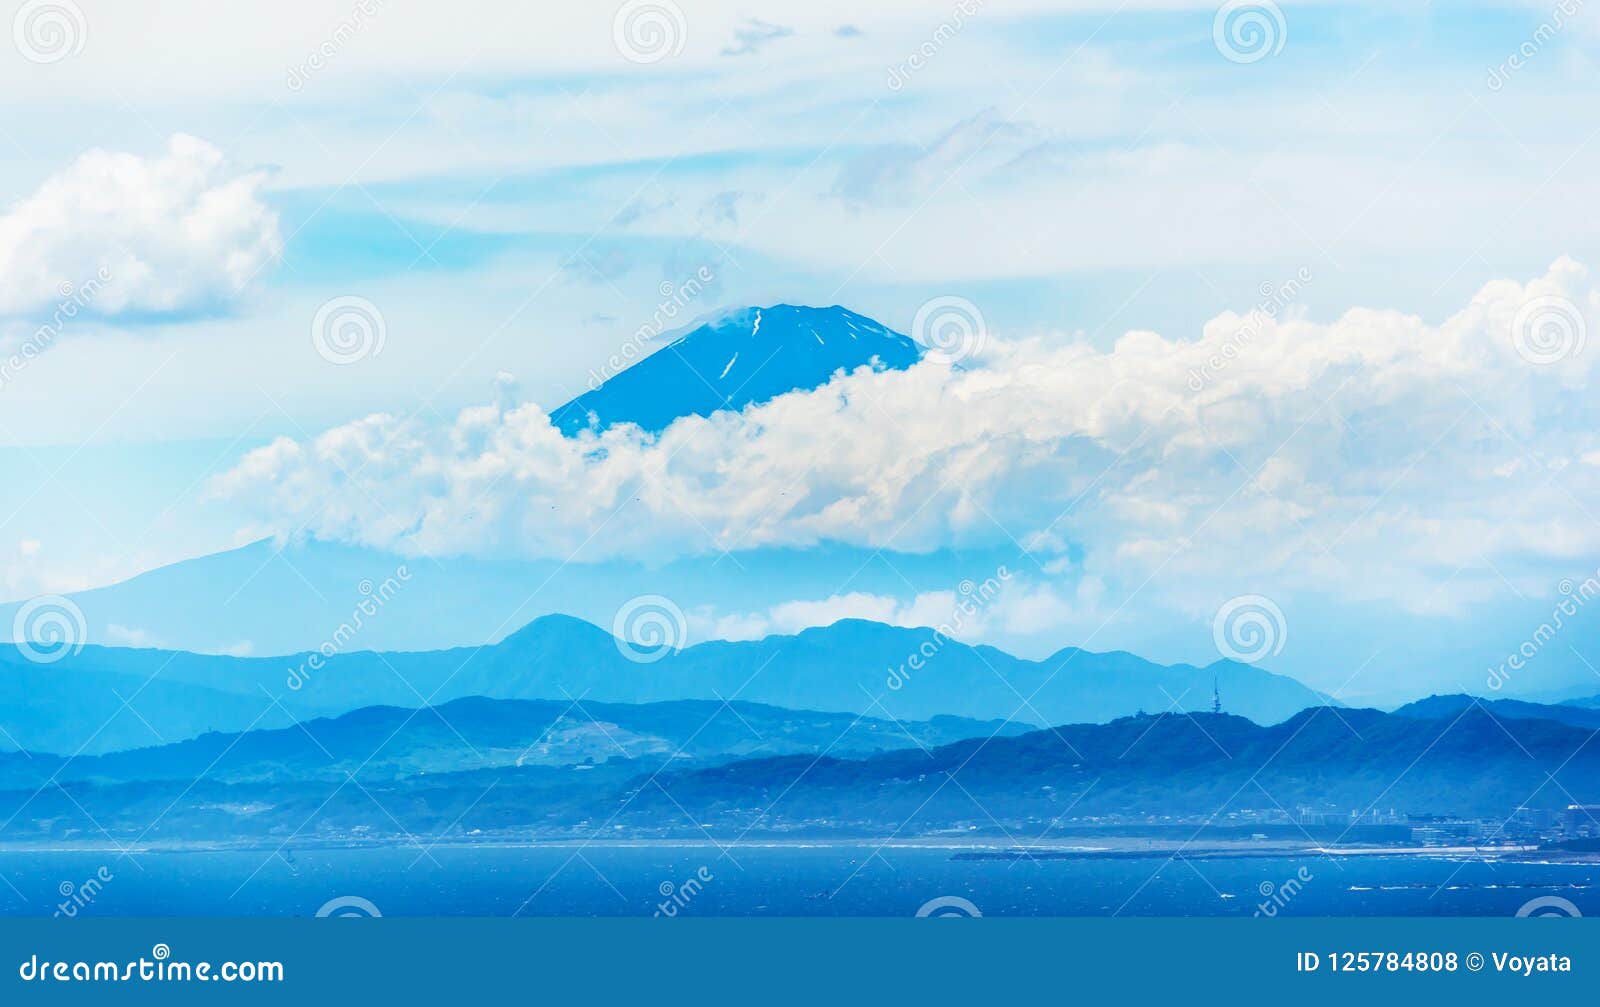 fuji mountain view in enoshima island, japan